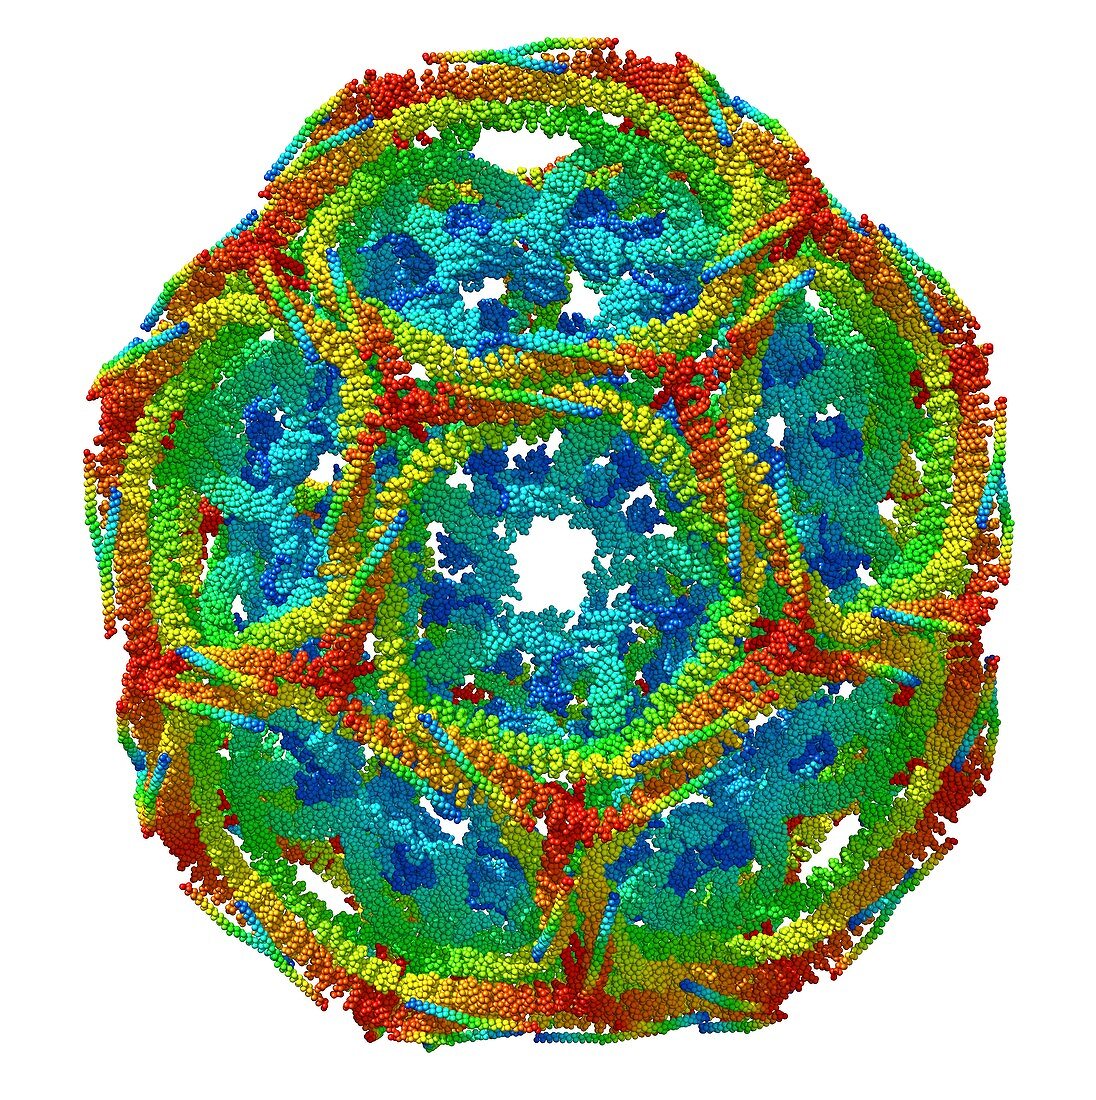 Clathrin lattice,molecular model